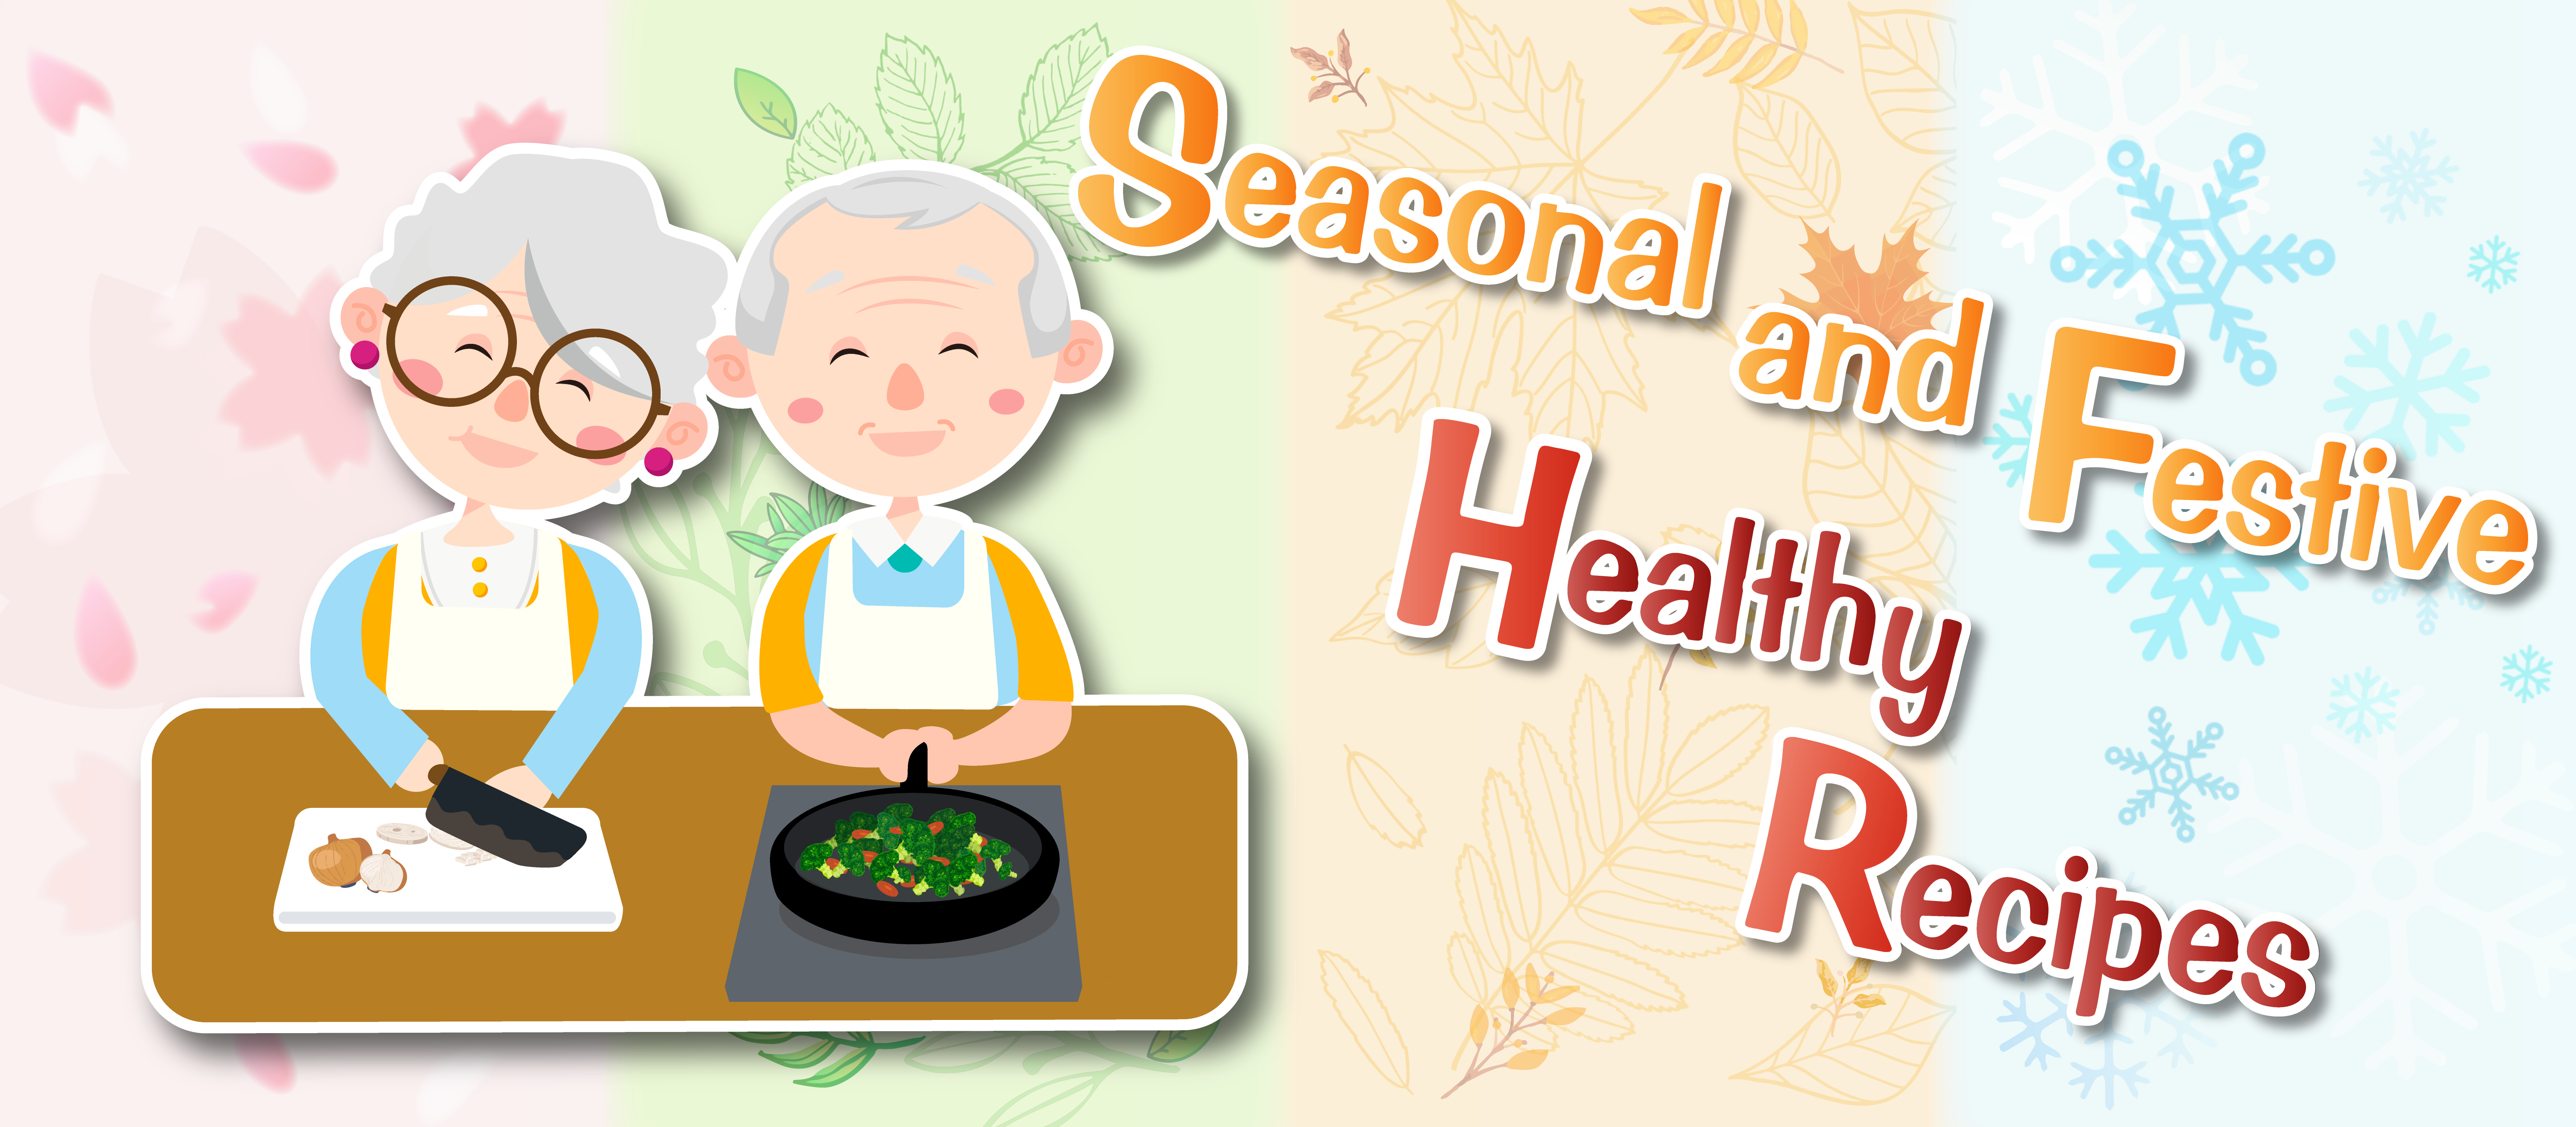 Seasonal and Festive Healthy Recipes